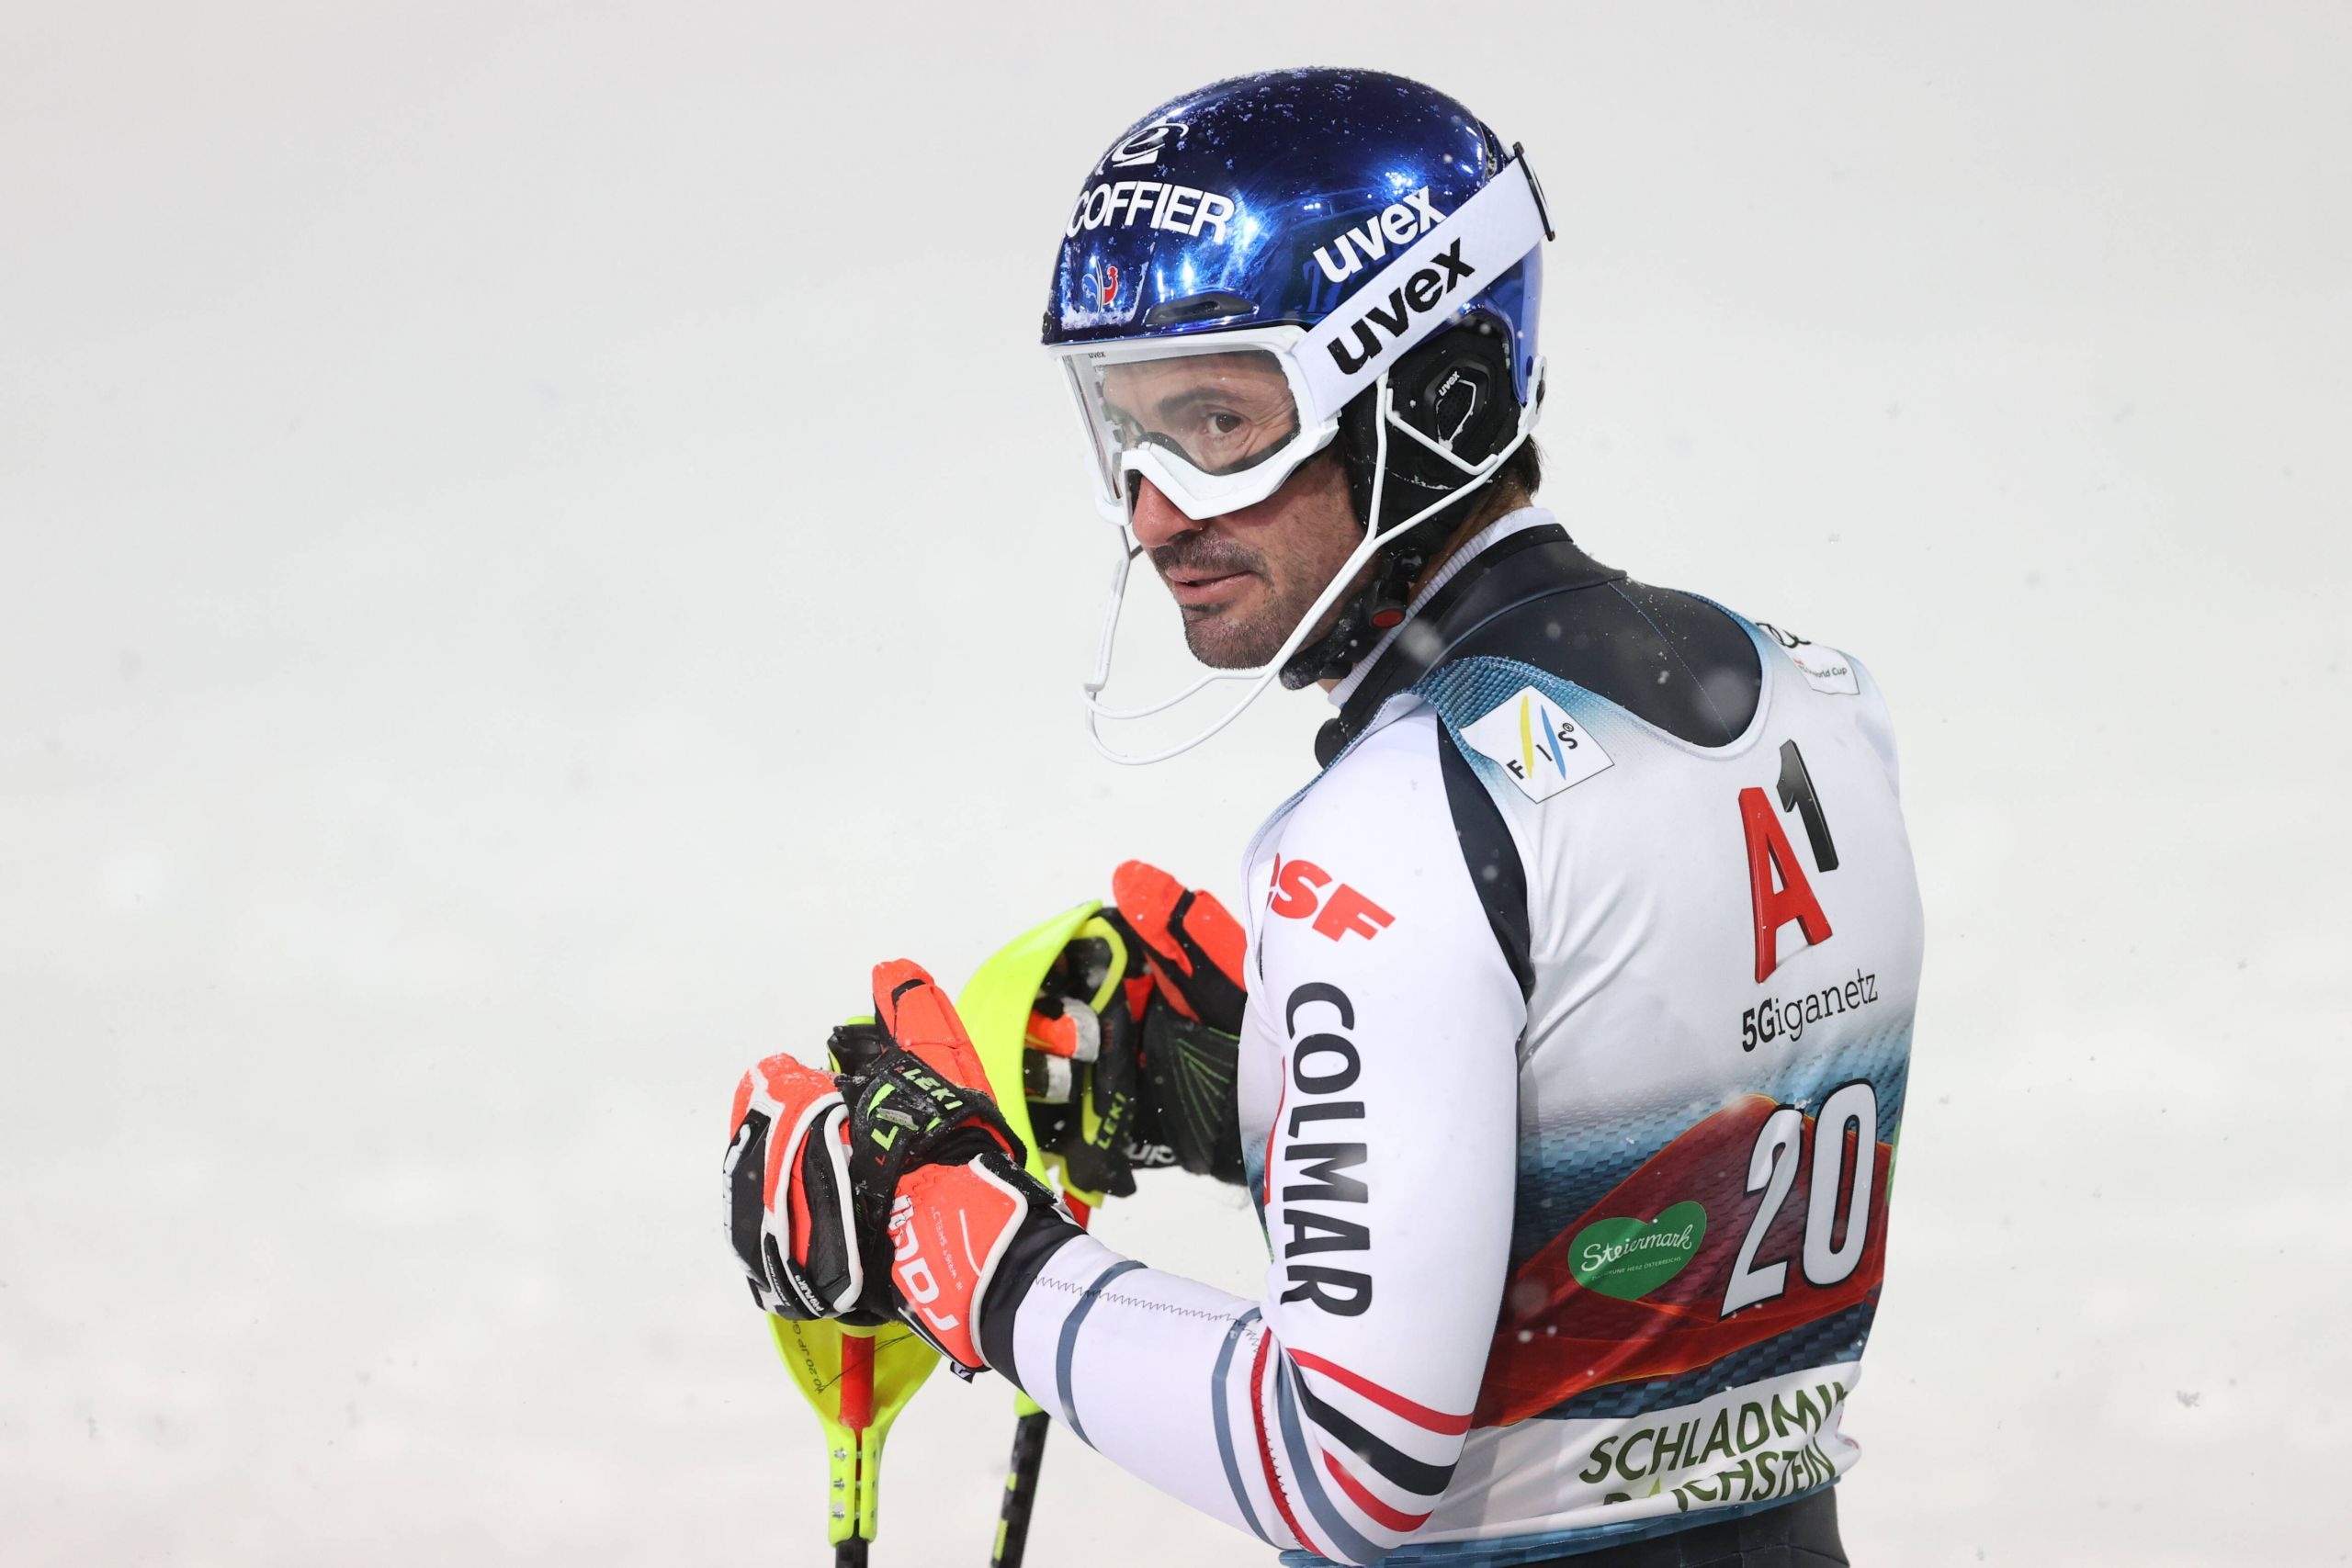 Slalom: Slalom World champion, Jean-Baptiste Grange, Race on skis around obstacles. 2560x1710 HD Background.